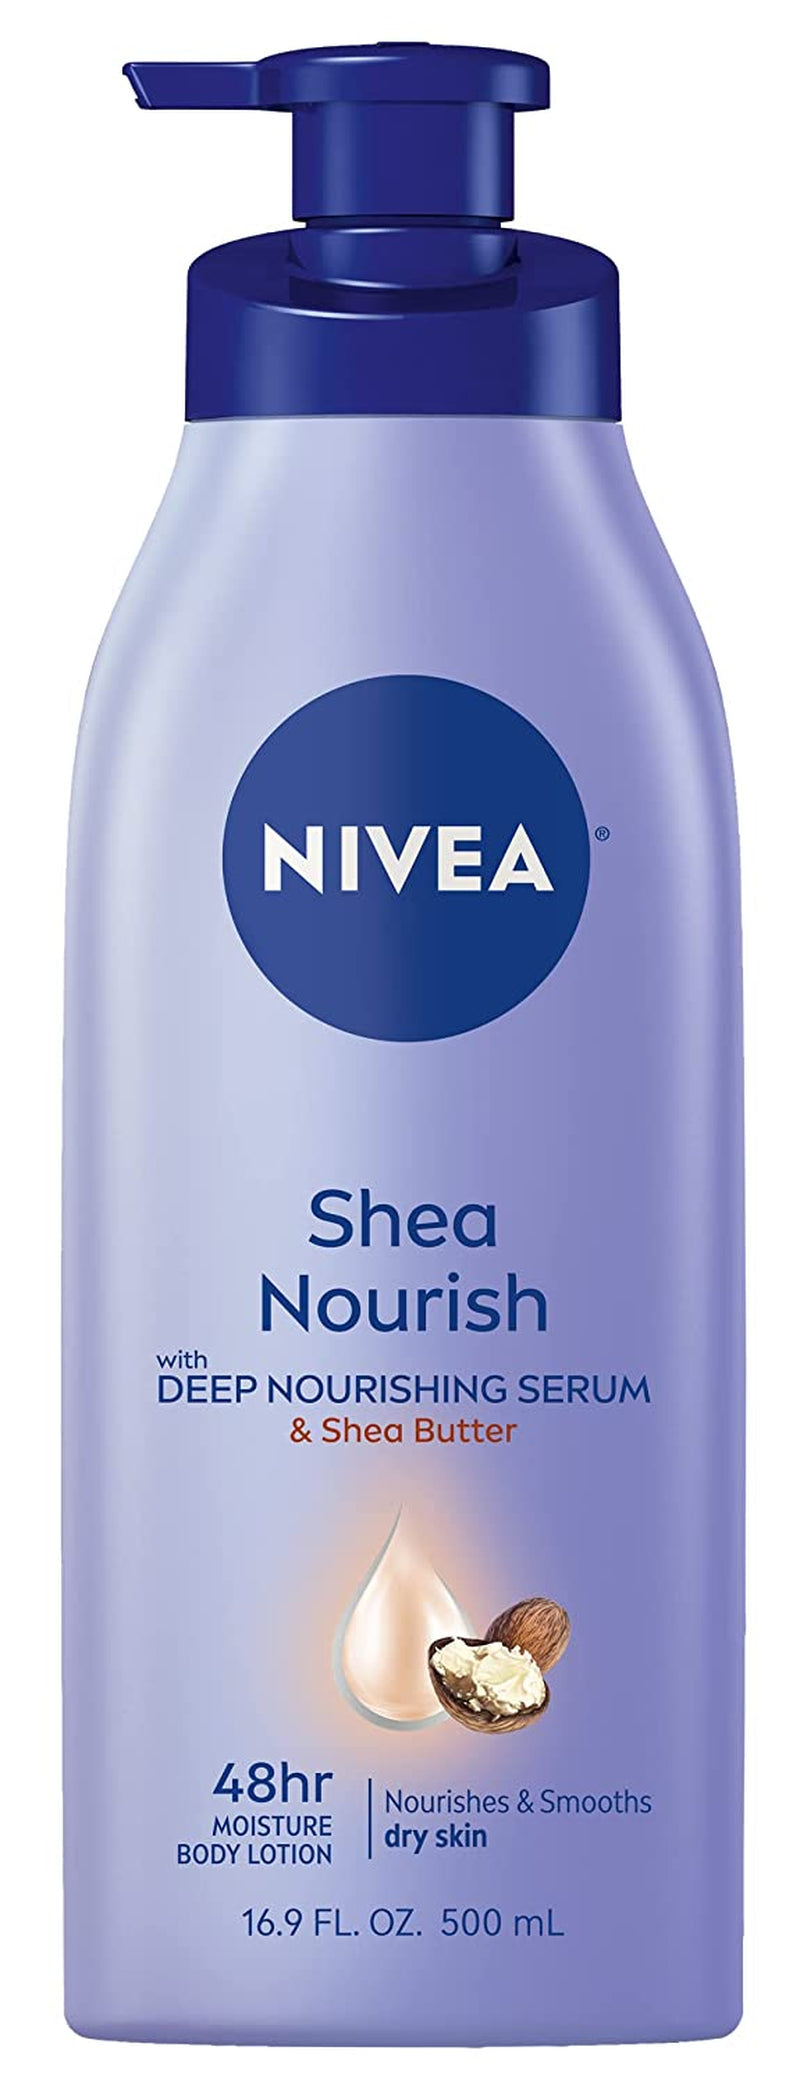 Shea Nourish Body Lotion, Dry Skin Lotion with Shea Butter, 16.9 Fl Oz Pump Bottle